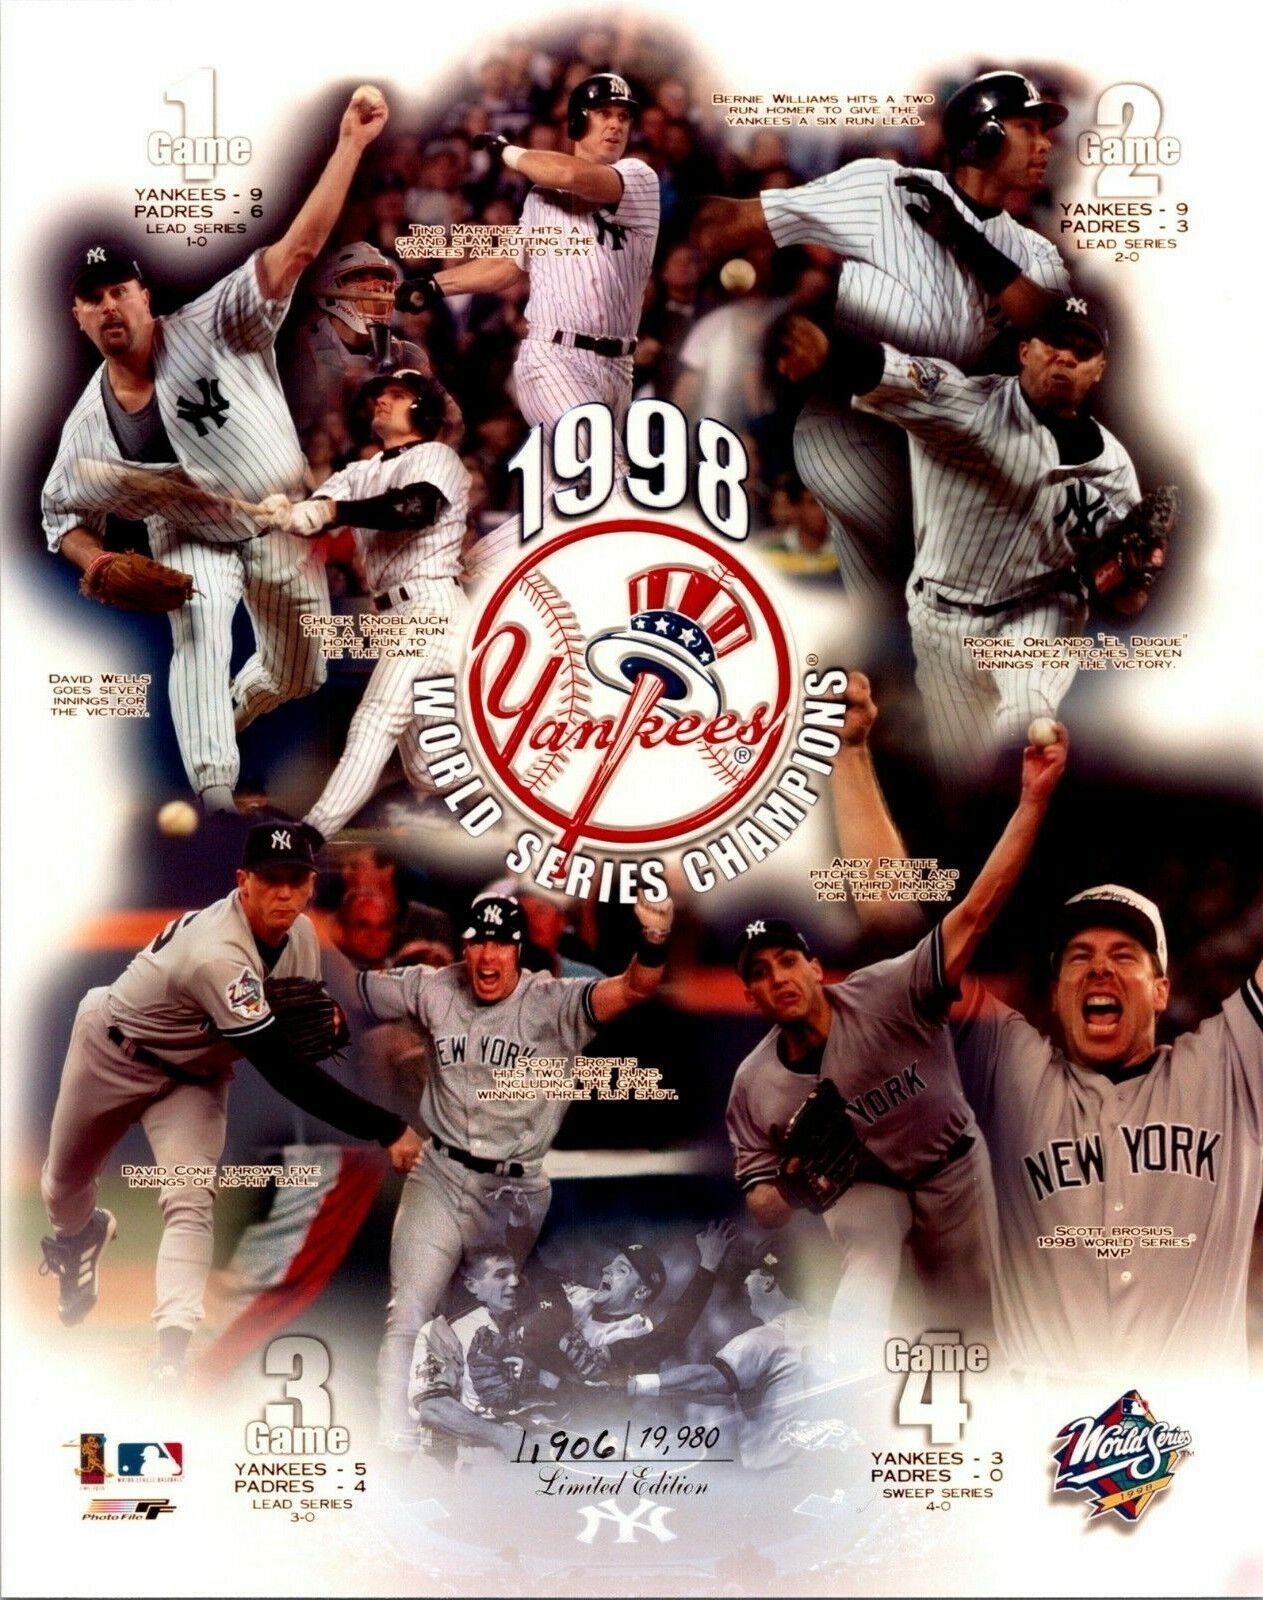 1998 NY Yankees World Series Champions Game 3 LE PF 8x10 Photo 1,906/19,980